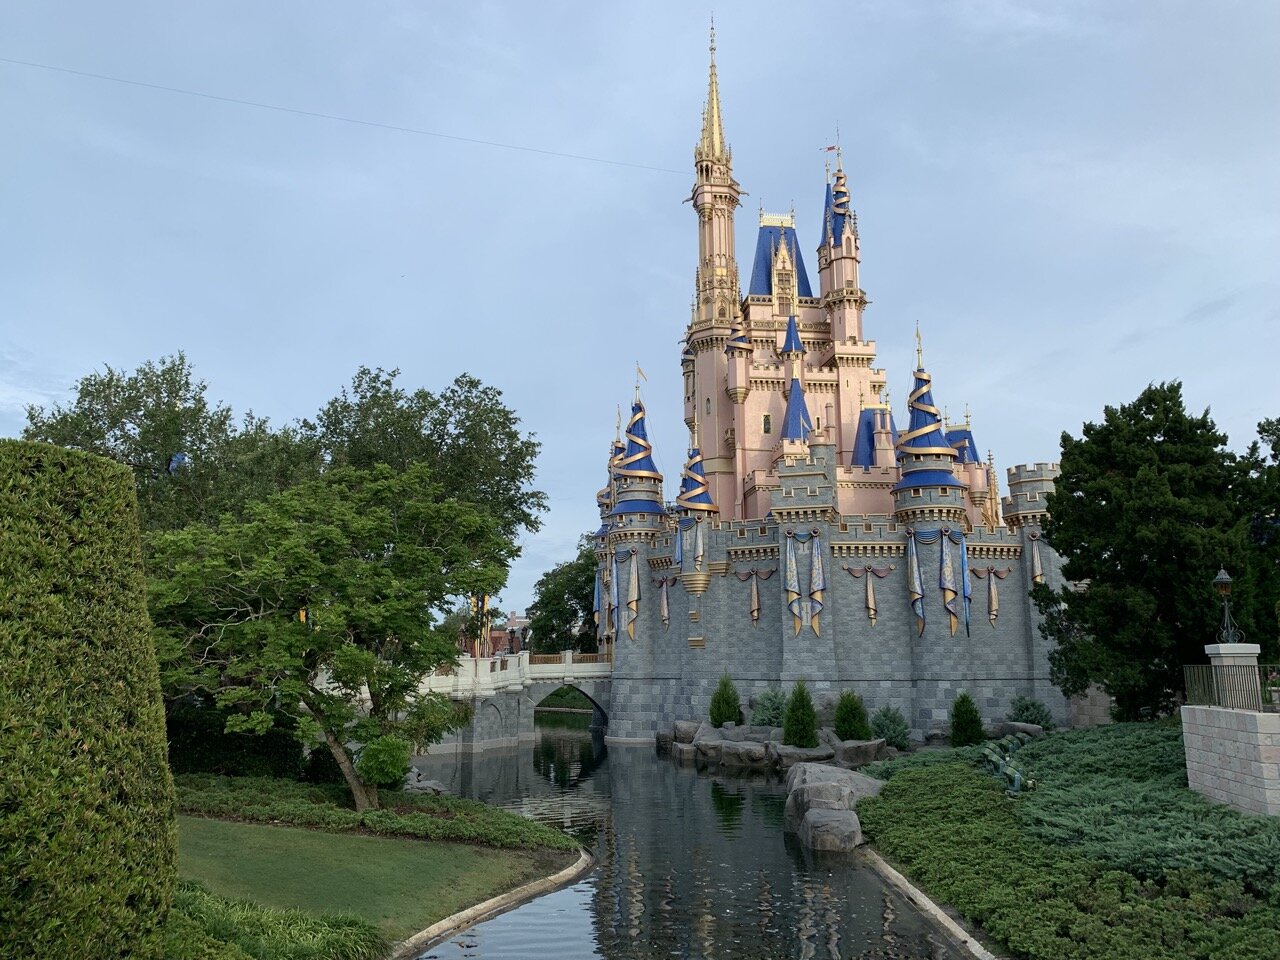 We Guarantee to Make Your Next Disney Vacation Magical - Magic